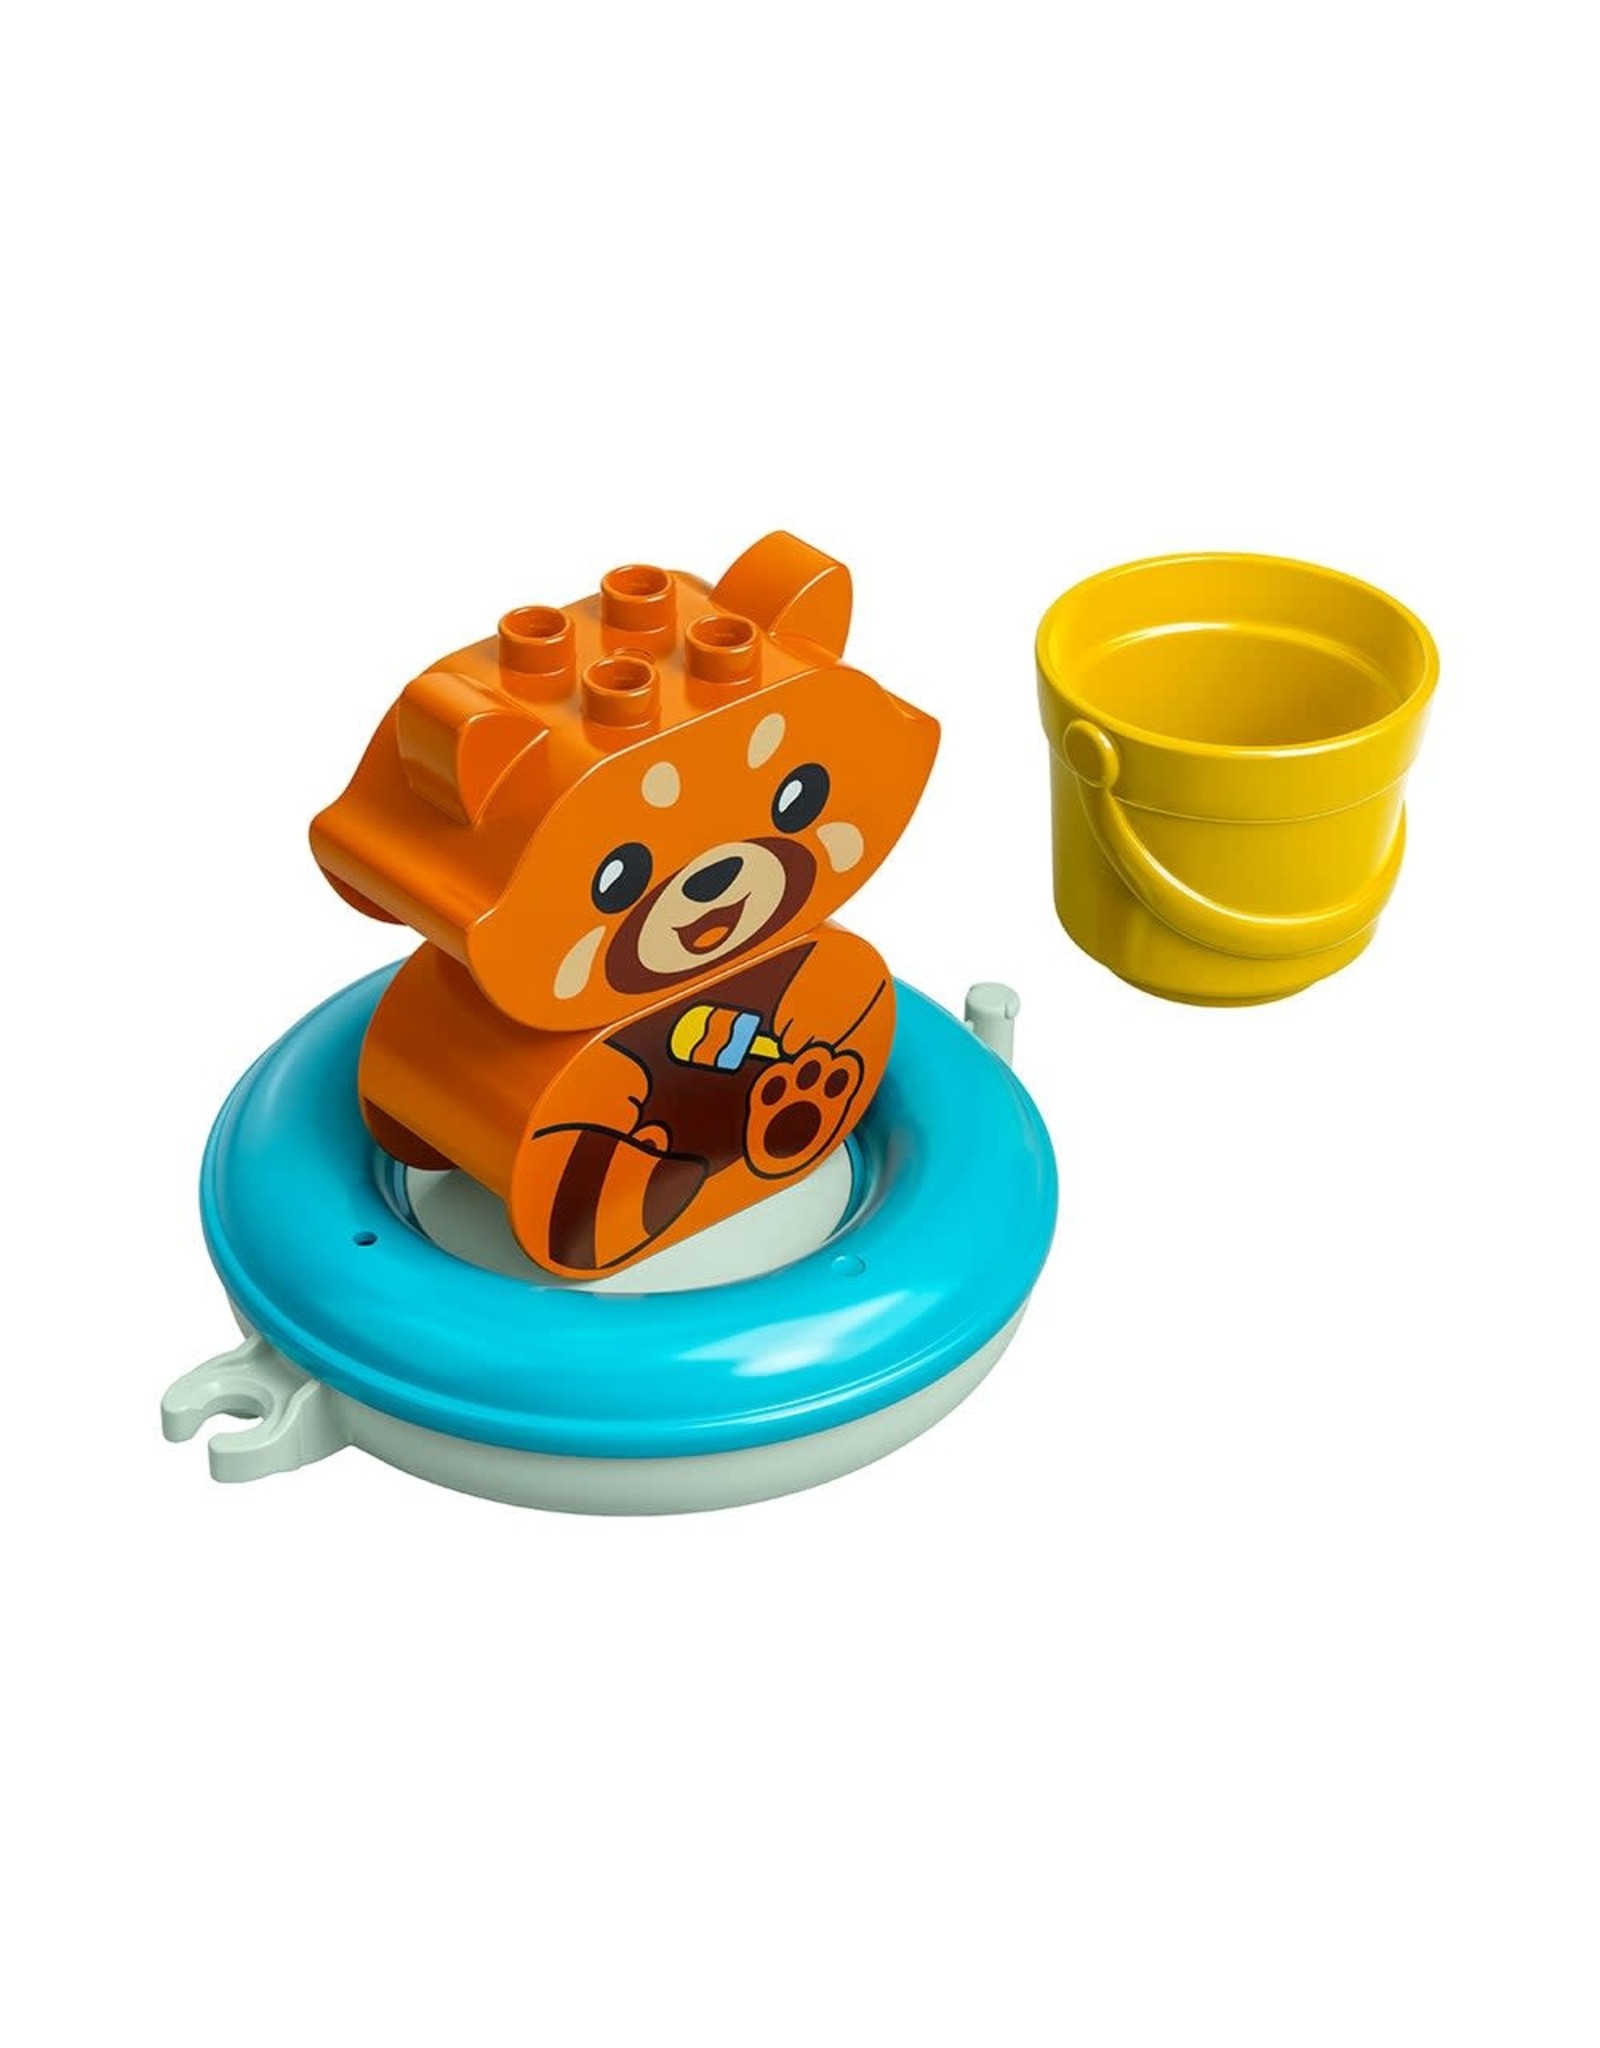 LEGO DUPLO My First 10964 Bath Time Fun: Floating Red Panda